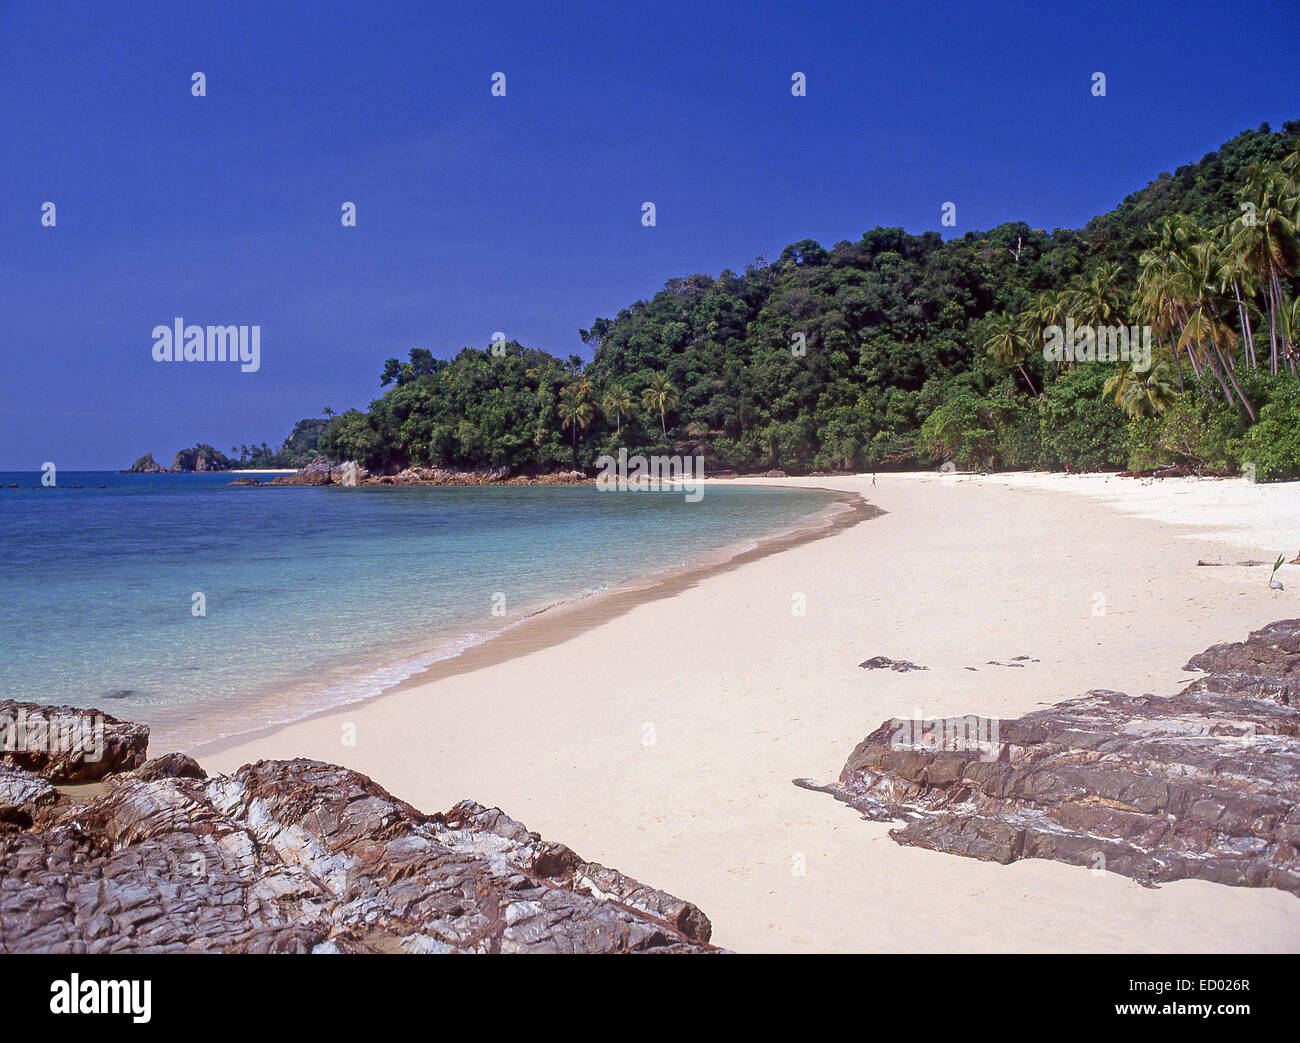 Beach on Kapas Island (Pulau Kapas), Terengganu State, Malaysia Stock Photo